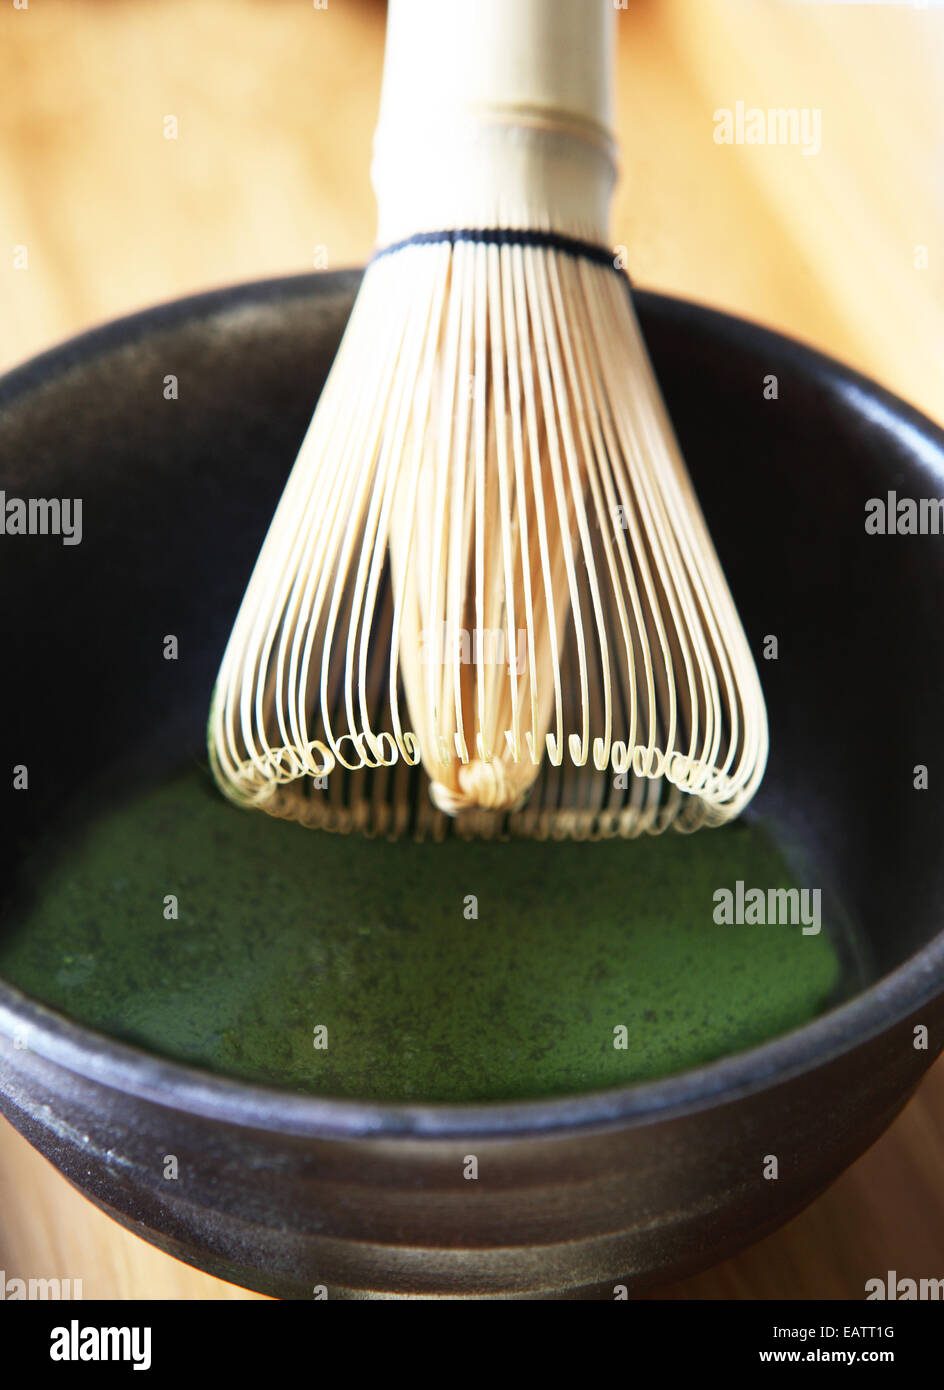 https://c8.alamy.com/comp/EATT1G/matcha-powder-organic-green-tea-with-a-bamboo-tea-brush-EATT1G.jpg